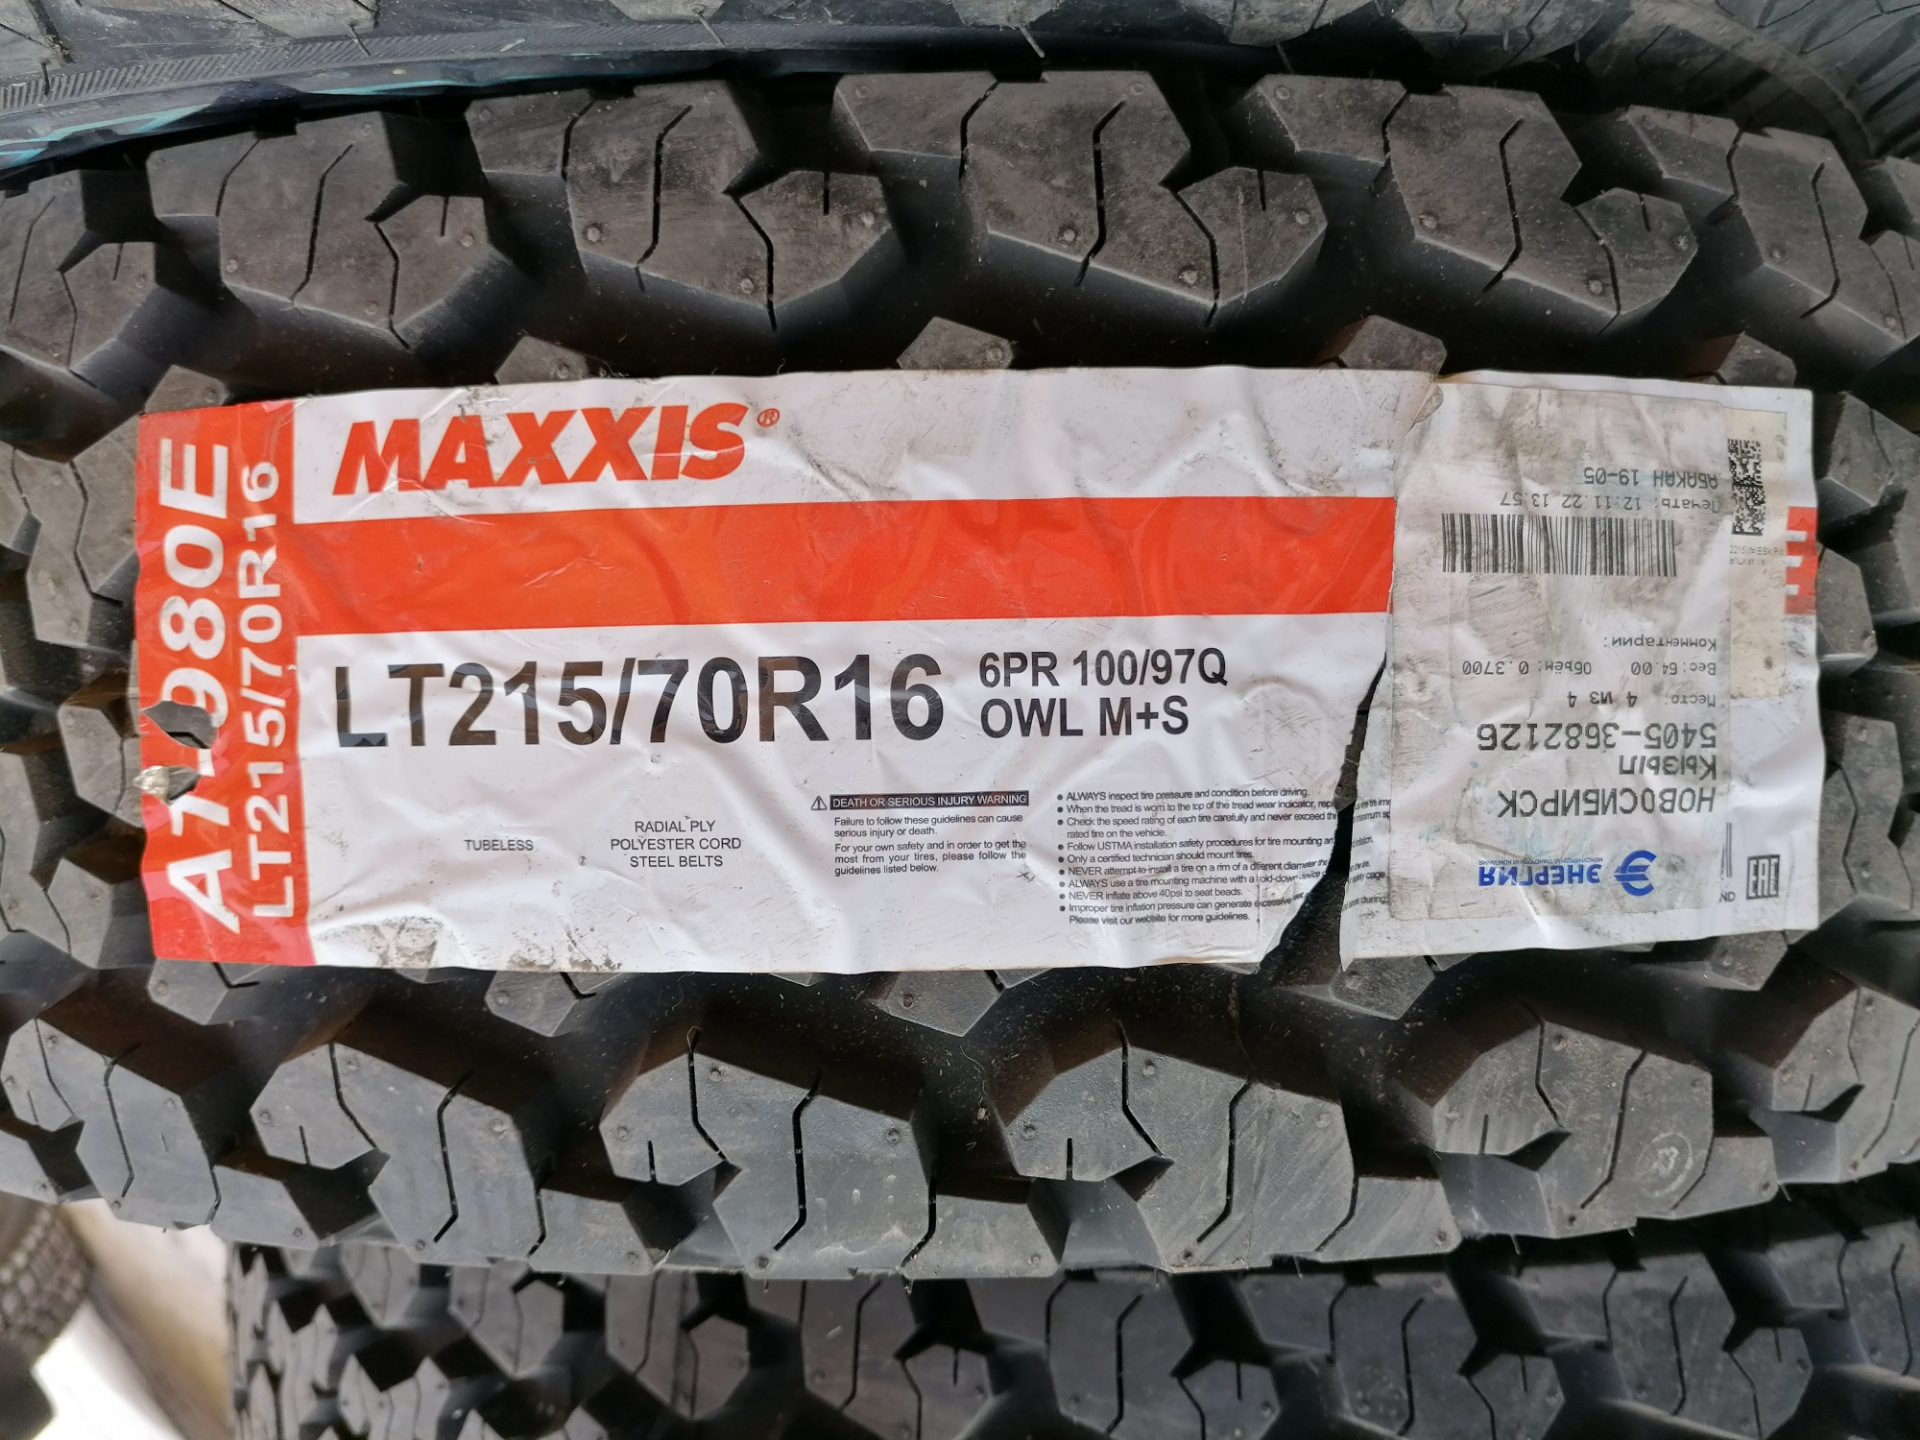 Maxxis at-980e worm-Drive. Maxxis at-980 worm-Drive. Максис АТ 980. Worm Drive 980 Maxxis. Maxxis отзывы лето